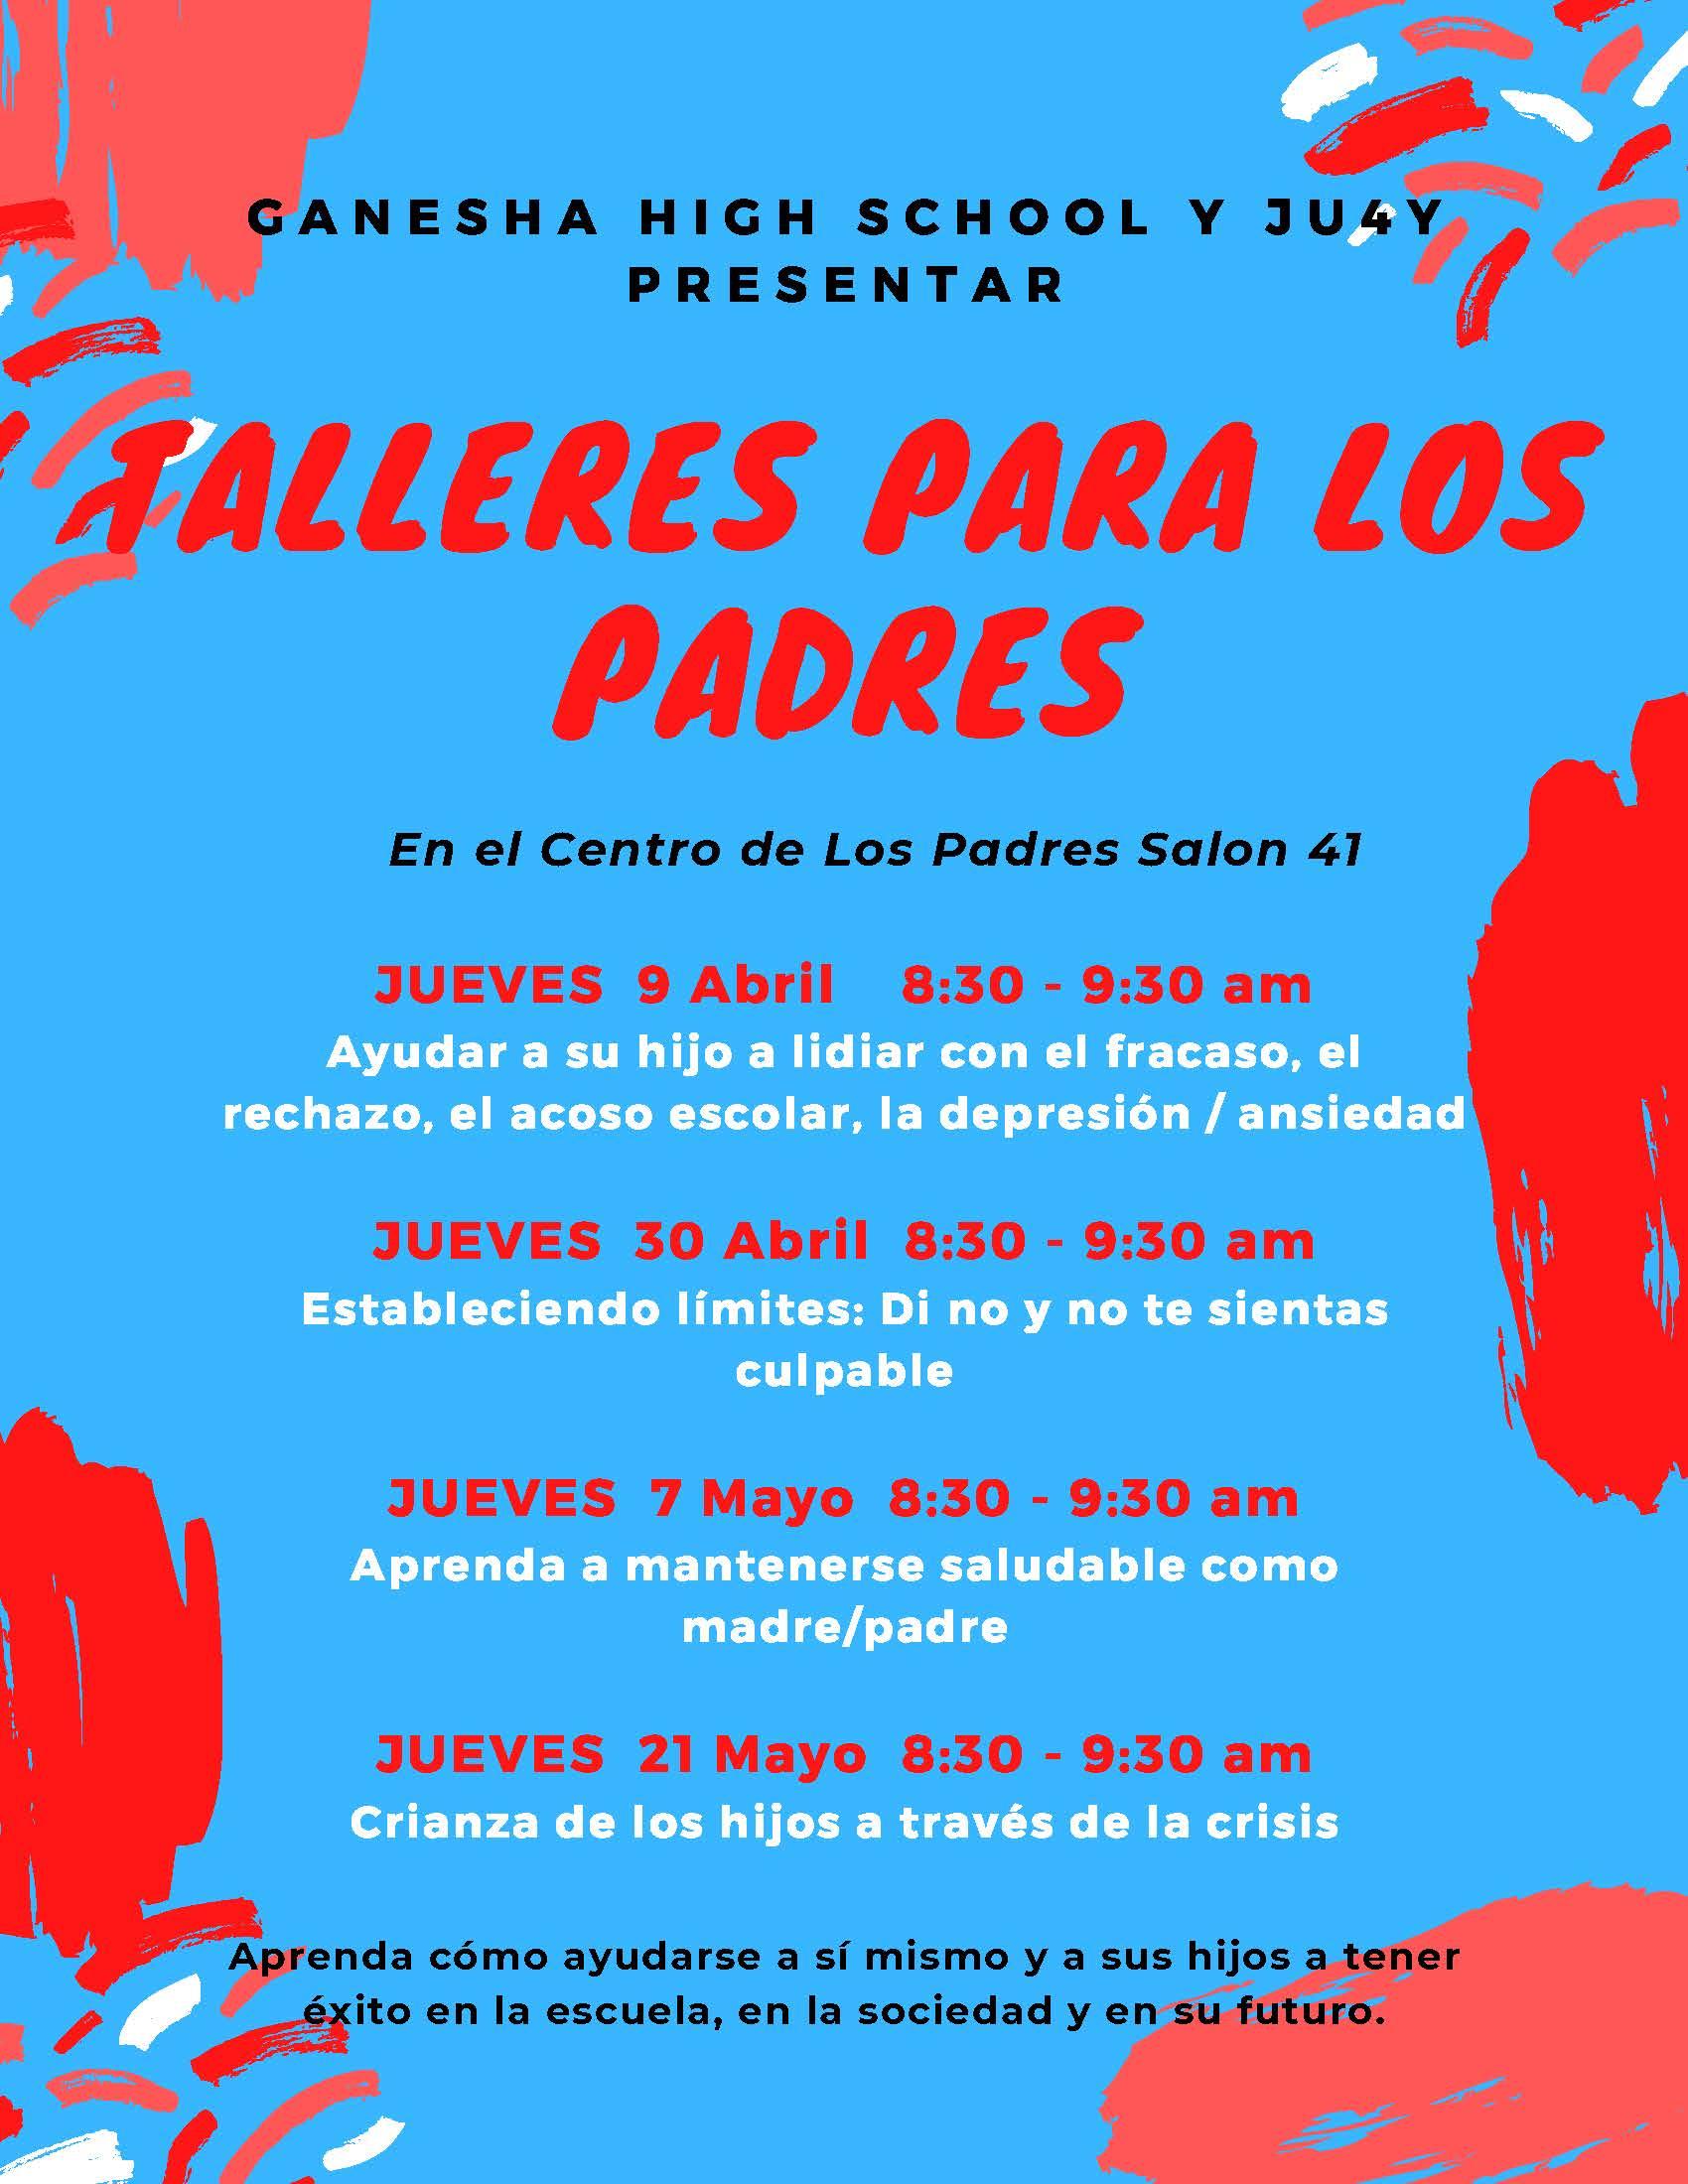 JU4Y Parent Workshop Flyer in Spanish